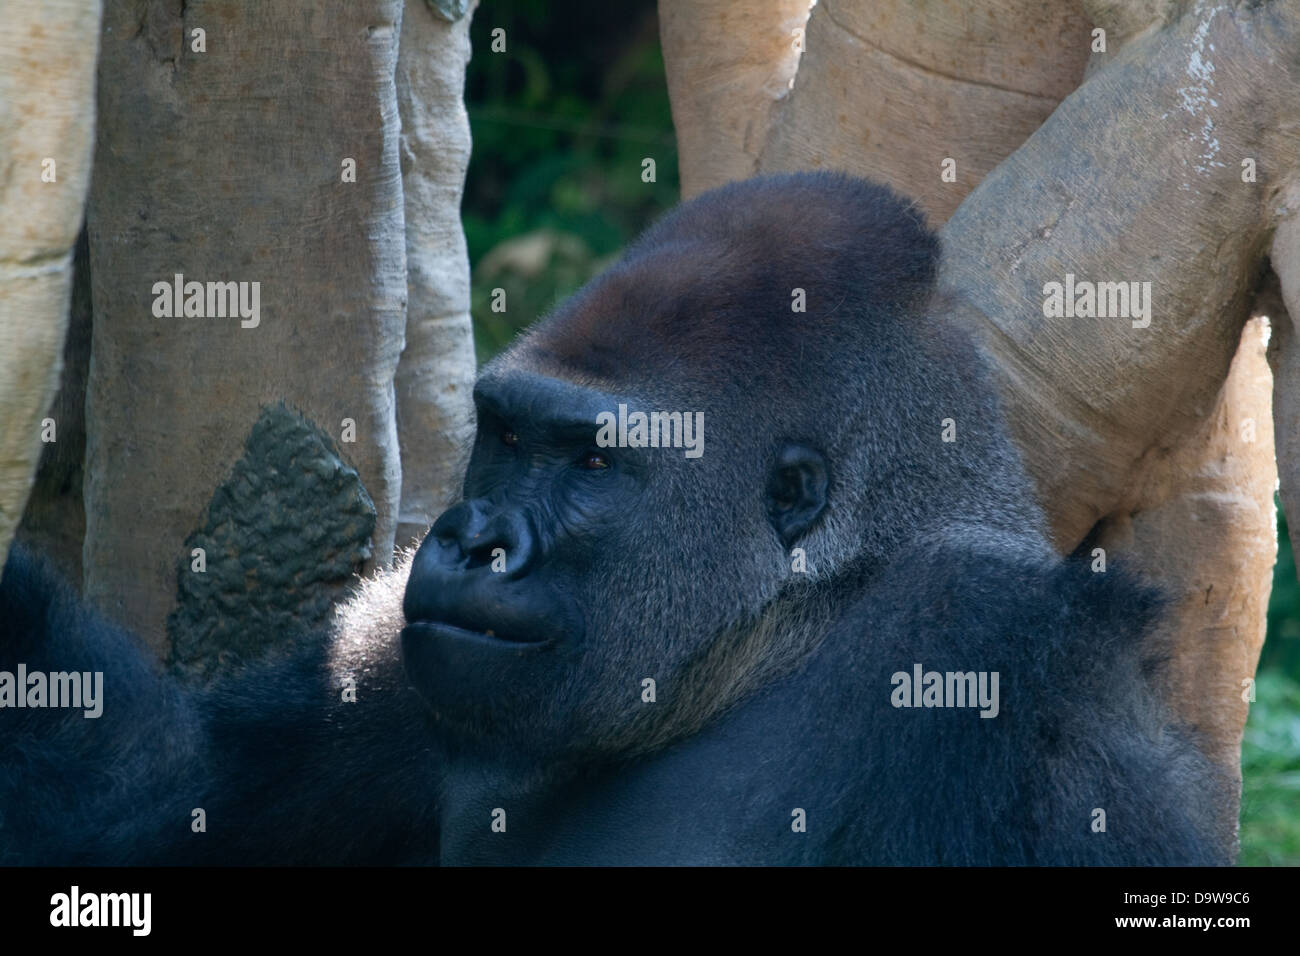 Gorilla at the zoo Stock Photo